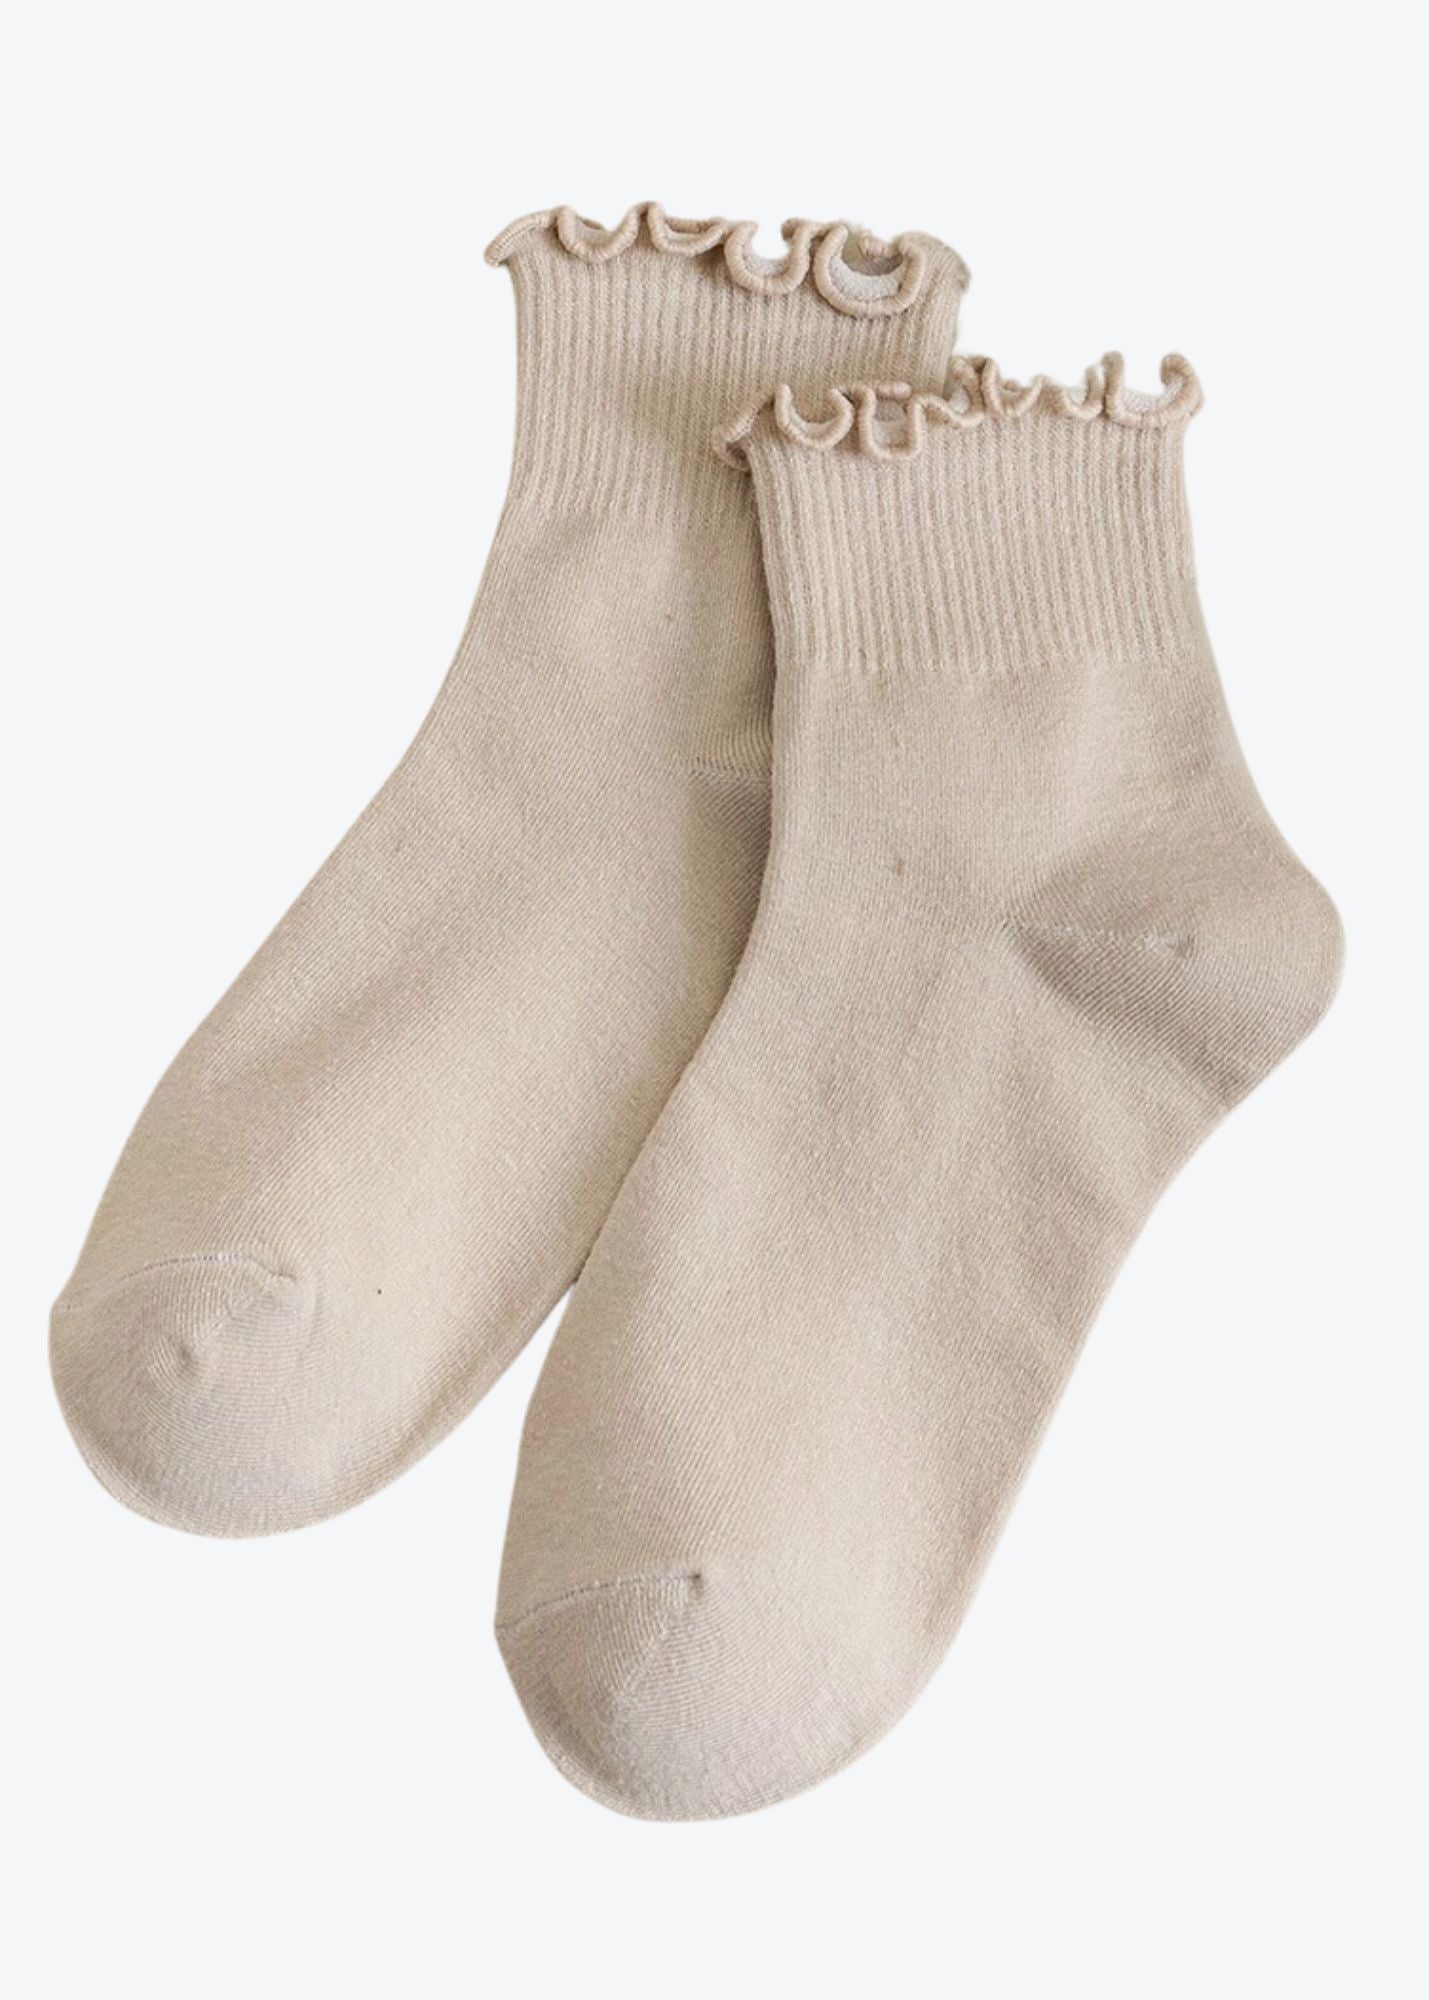 Ruffled Ankle Socks Accessories Khaki